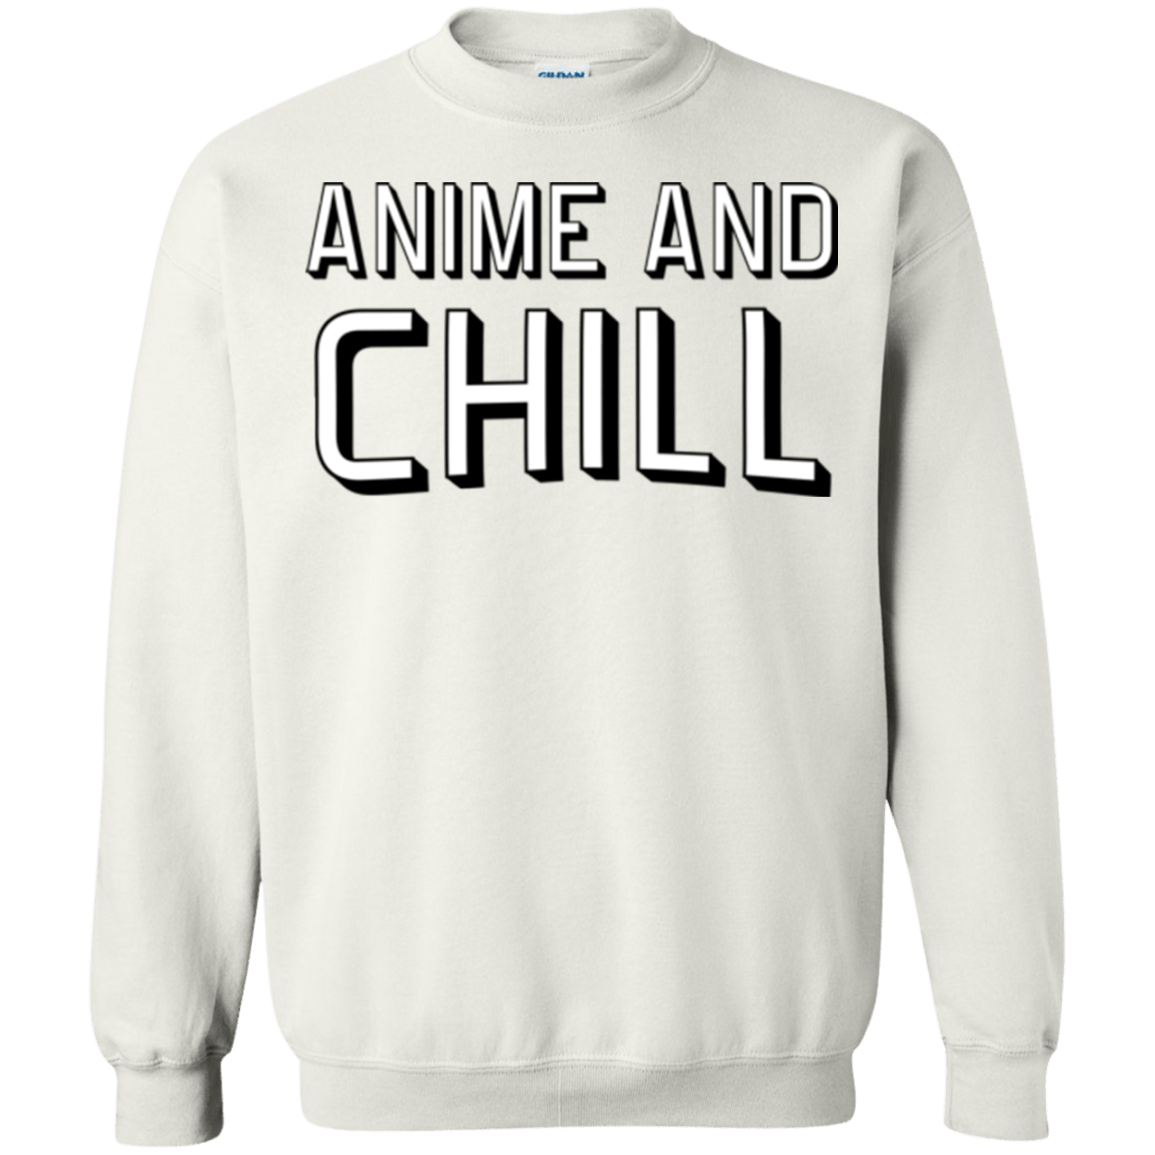 NIKE Custom Sweatshirt Hoodie Animecharacter Sleeve  Etsy